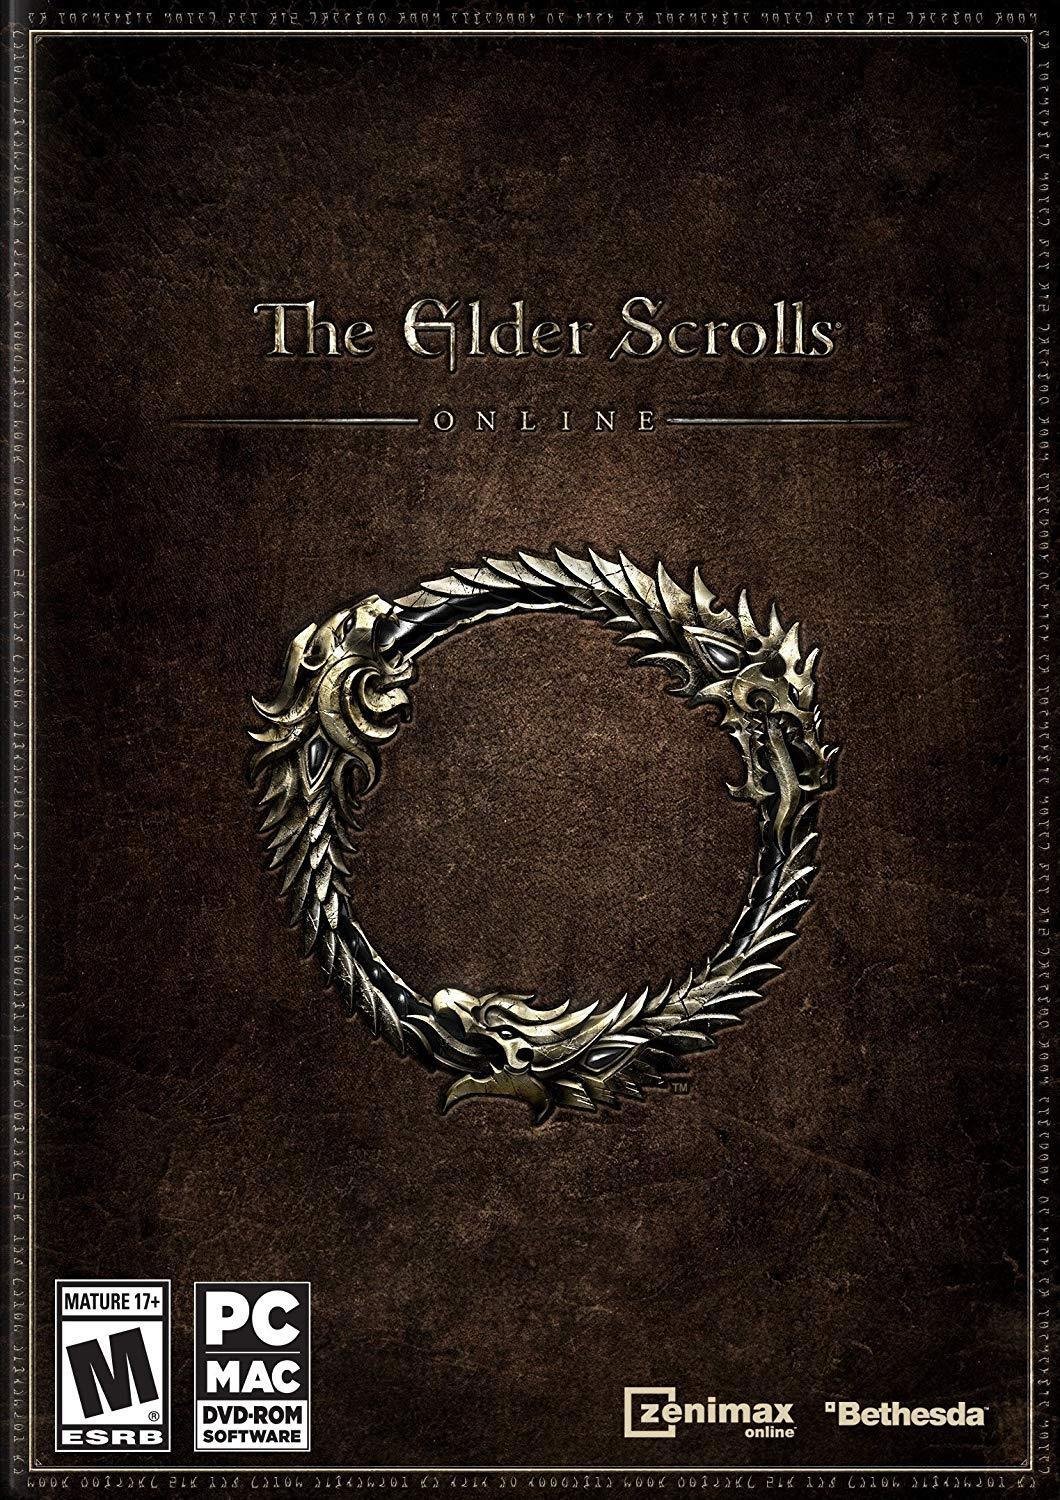 instal the new for apple The Elder Scrolls Online